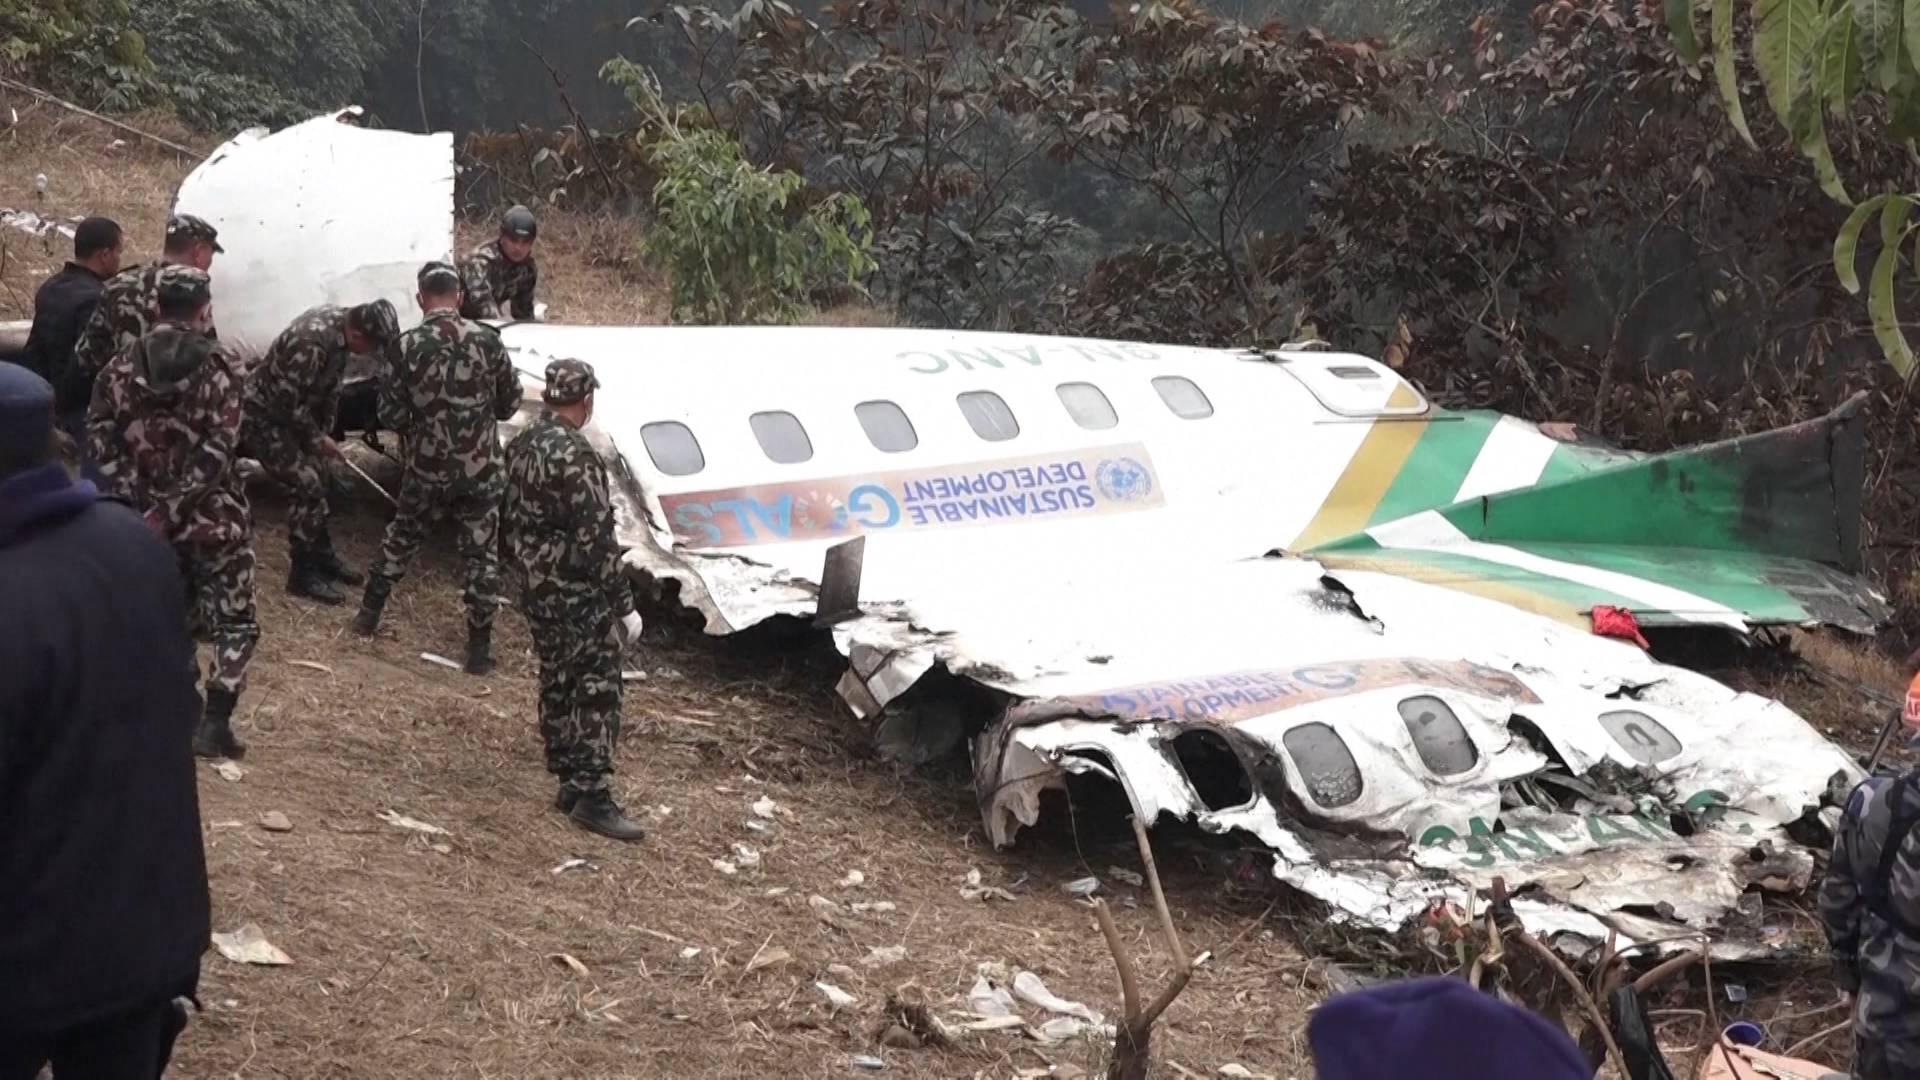 Nepal Airliner Crash Kills Dozens - Democracy Now!